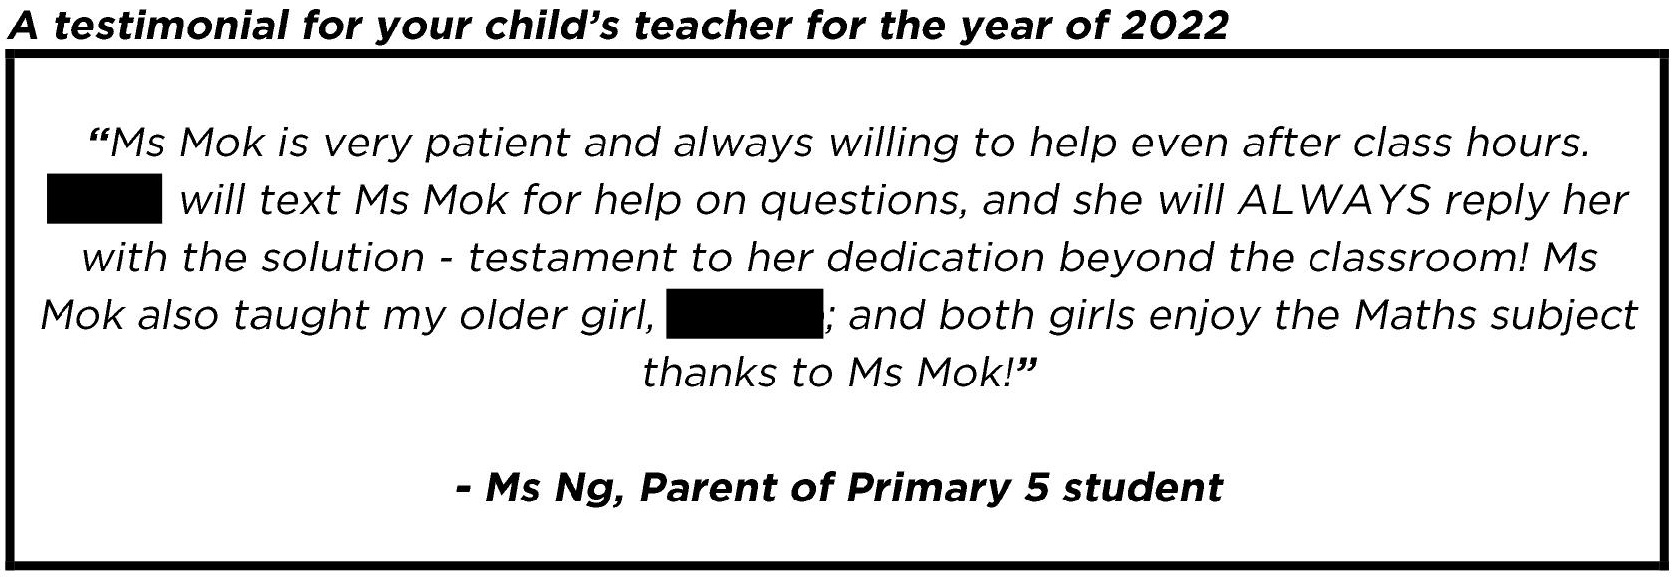 "...her dedication beyond the classroom!"